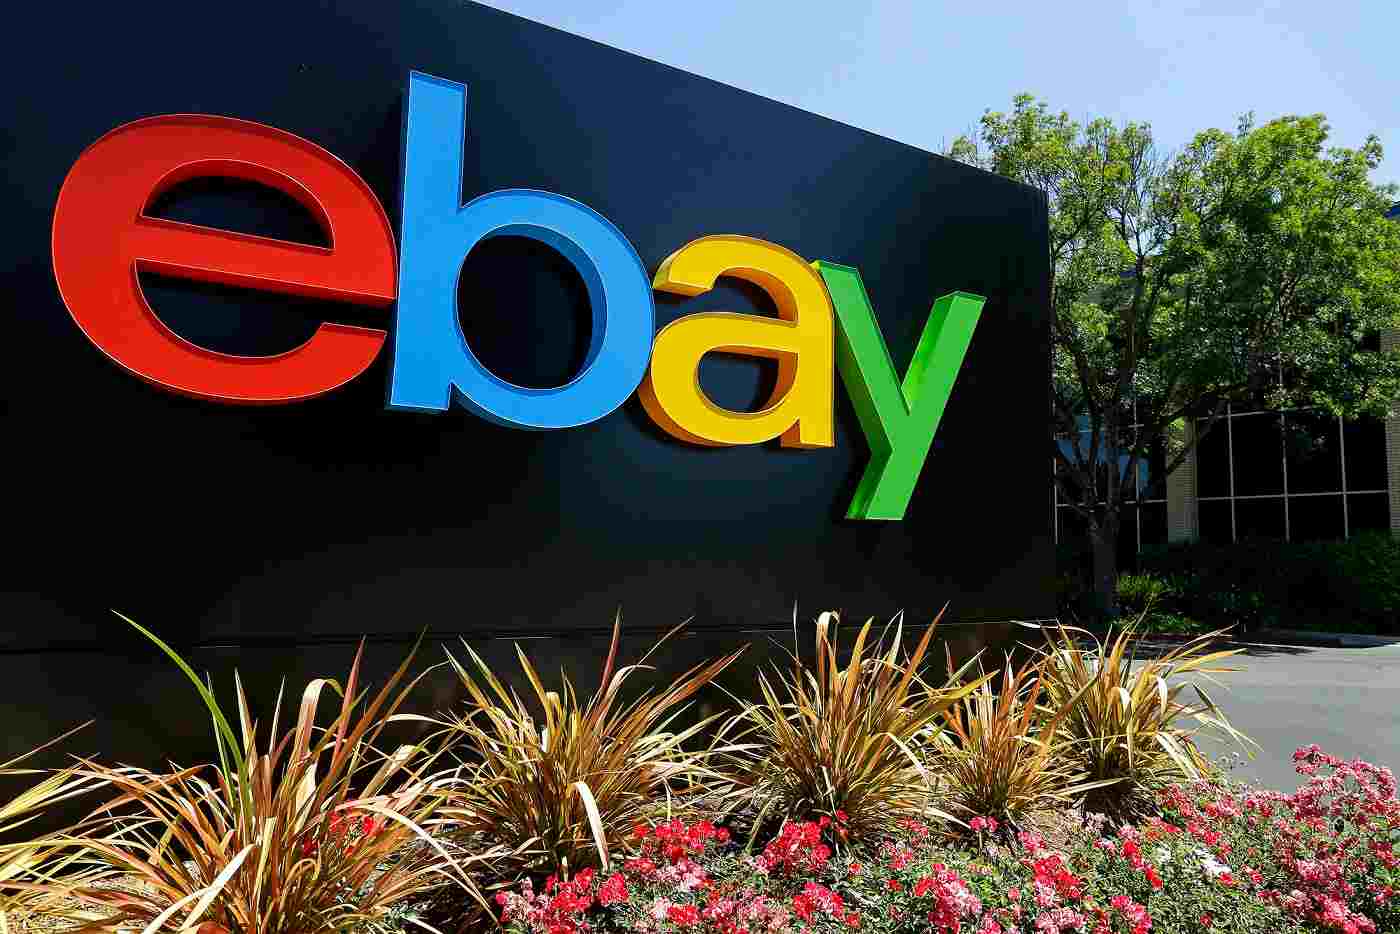 Ebay e la vendita di pneumatici online